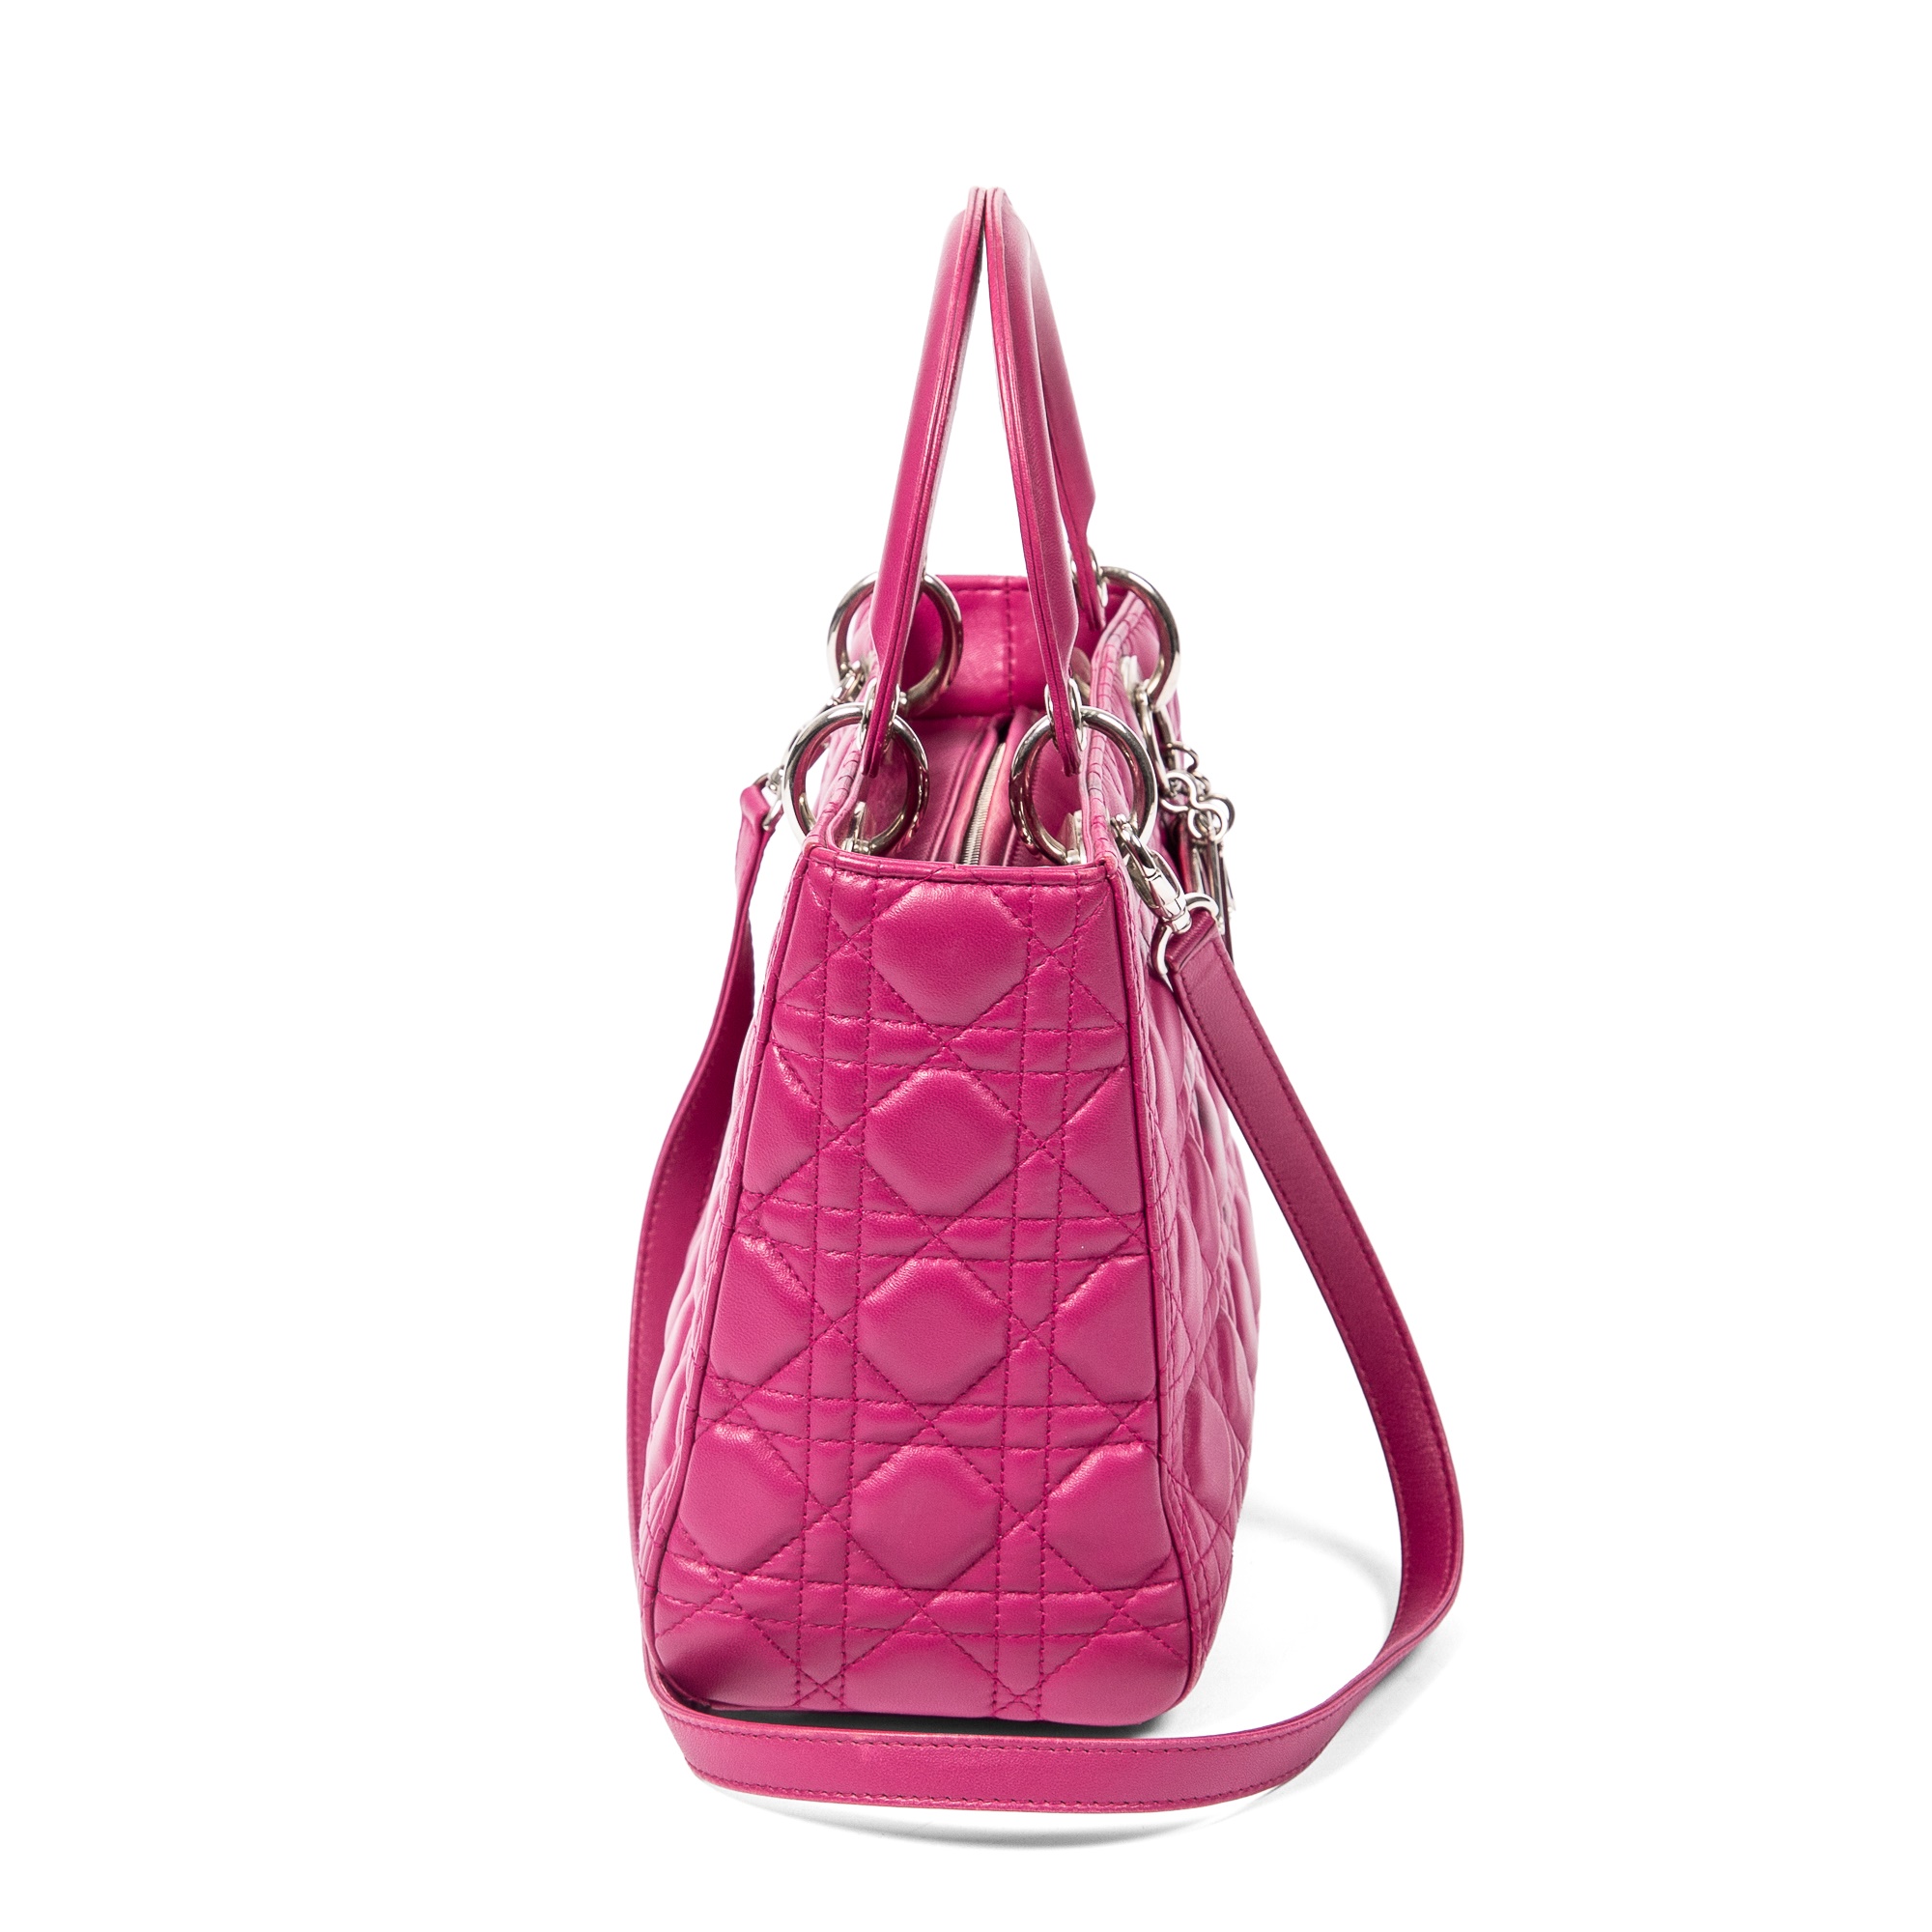 Christian Dior Fuchsia Medium Lady Dior Bag - Image 3 of 7